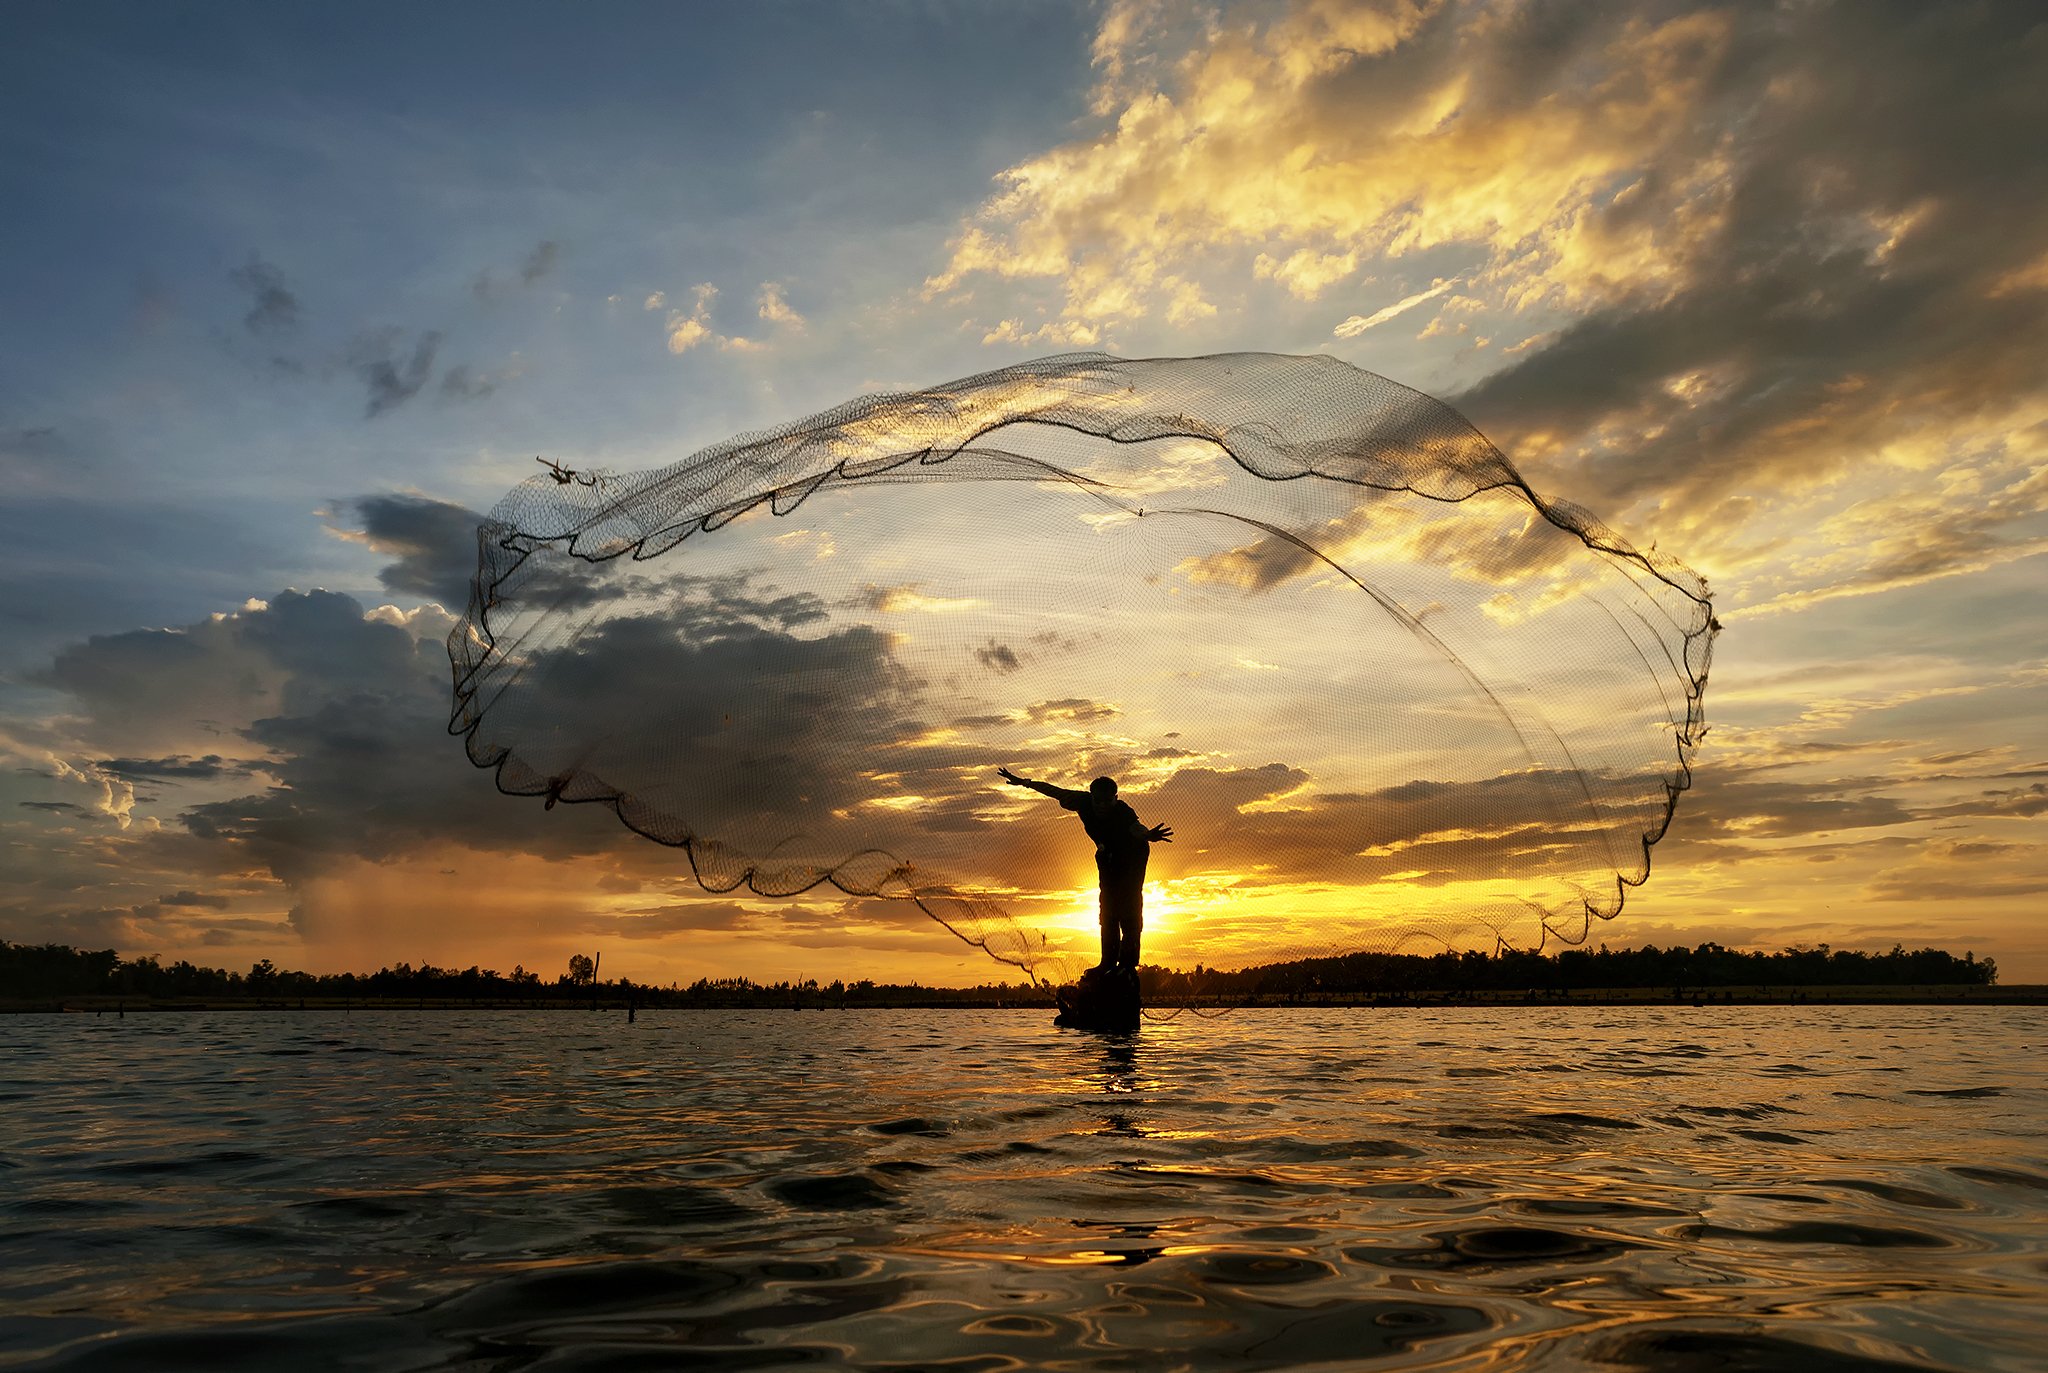 Asia, Asian, China, Clouds, Fisherman, Fishing, Nets, Photo, Photography, Reflection, Sky, Sunlight, Sunrise, Sunset, Thai, Thailand, Water, Yellow, Saravut Whanset